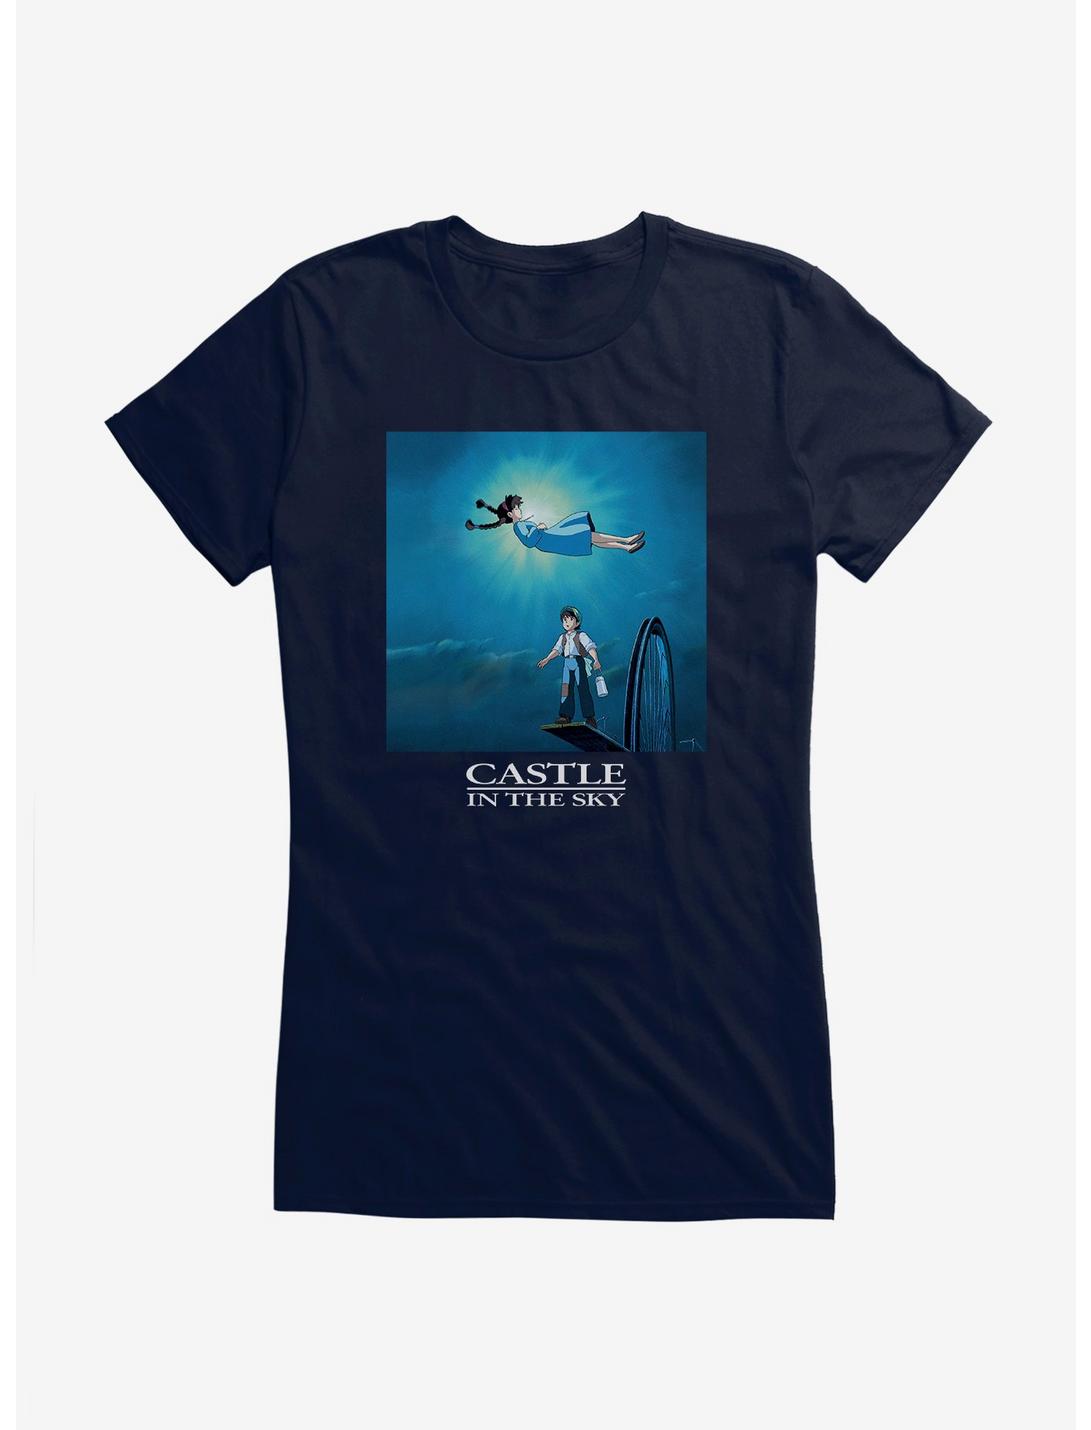 Studio Ghibli Castle In The Sky Poster Art Girls T-Shirt, , hi-res